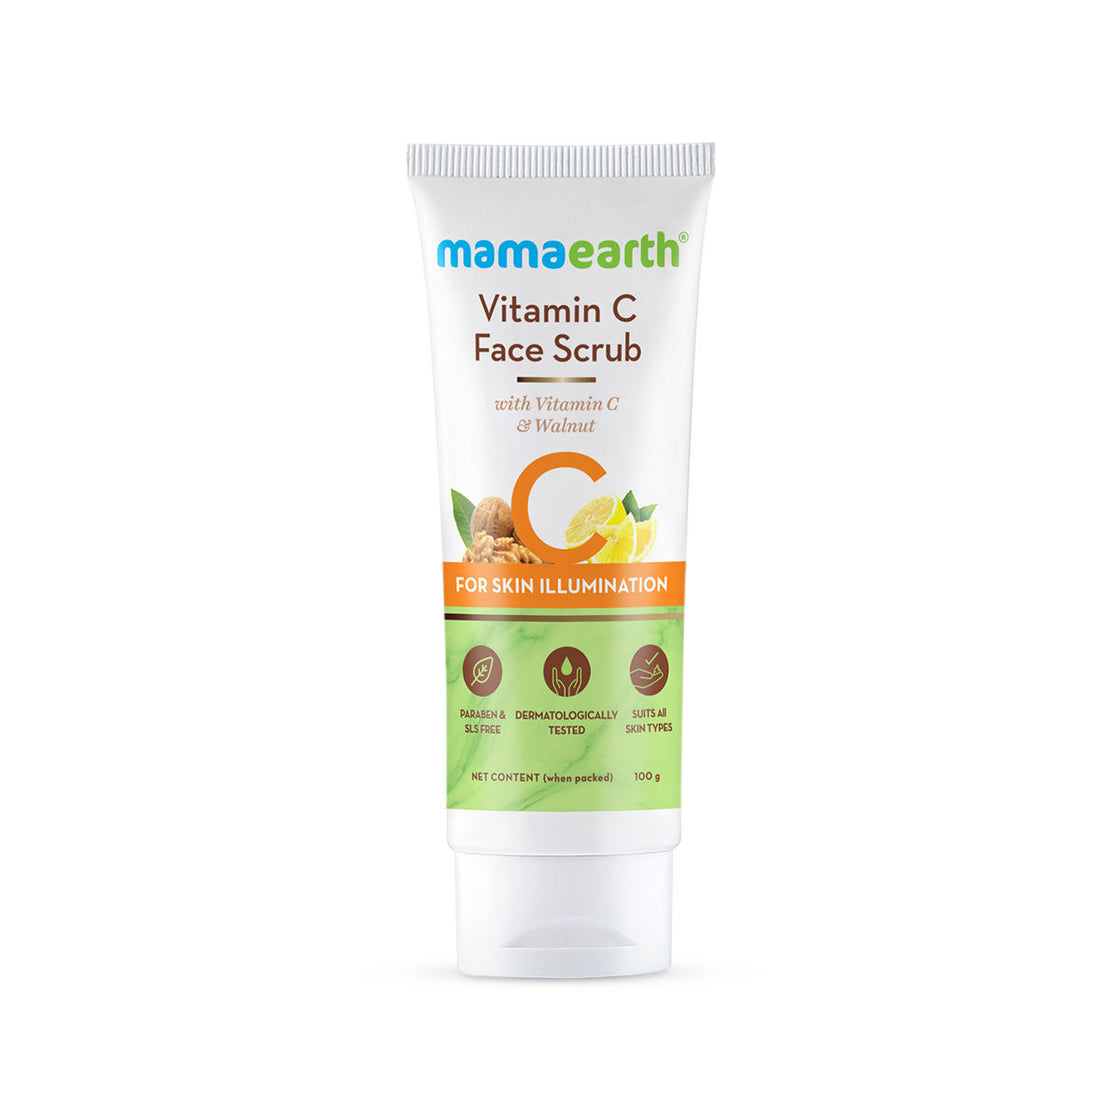 Mamaearth Vitamin C Face Scrub For Glowing Skin, With Vitamin C And Walnut For Skin Illumination